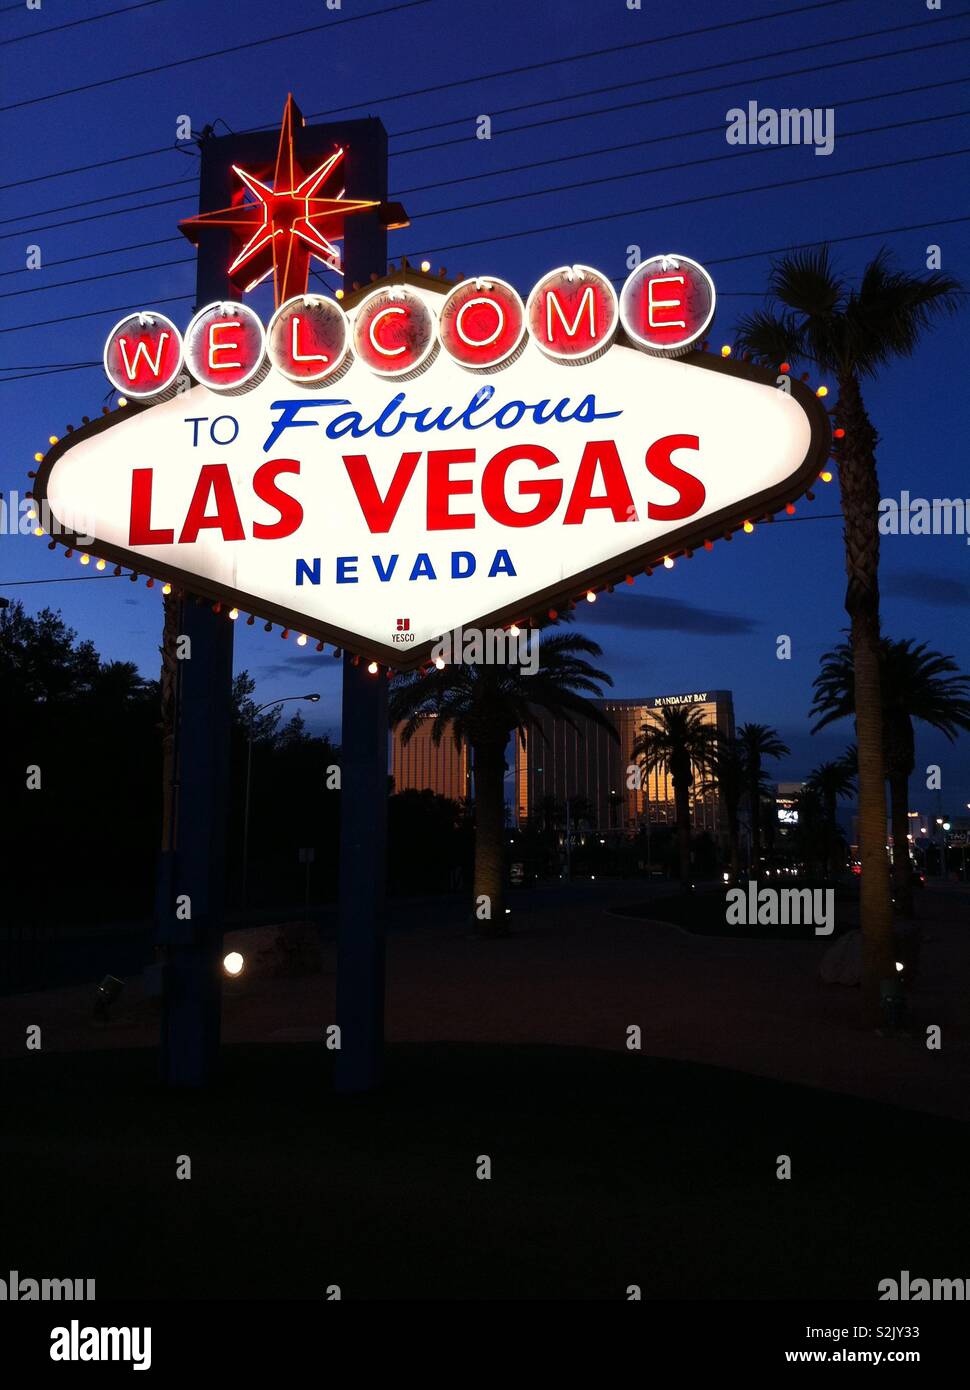 10,510 Las Vegas Sign Night Images, Stock Photos, 3D objects, & Vectors